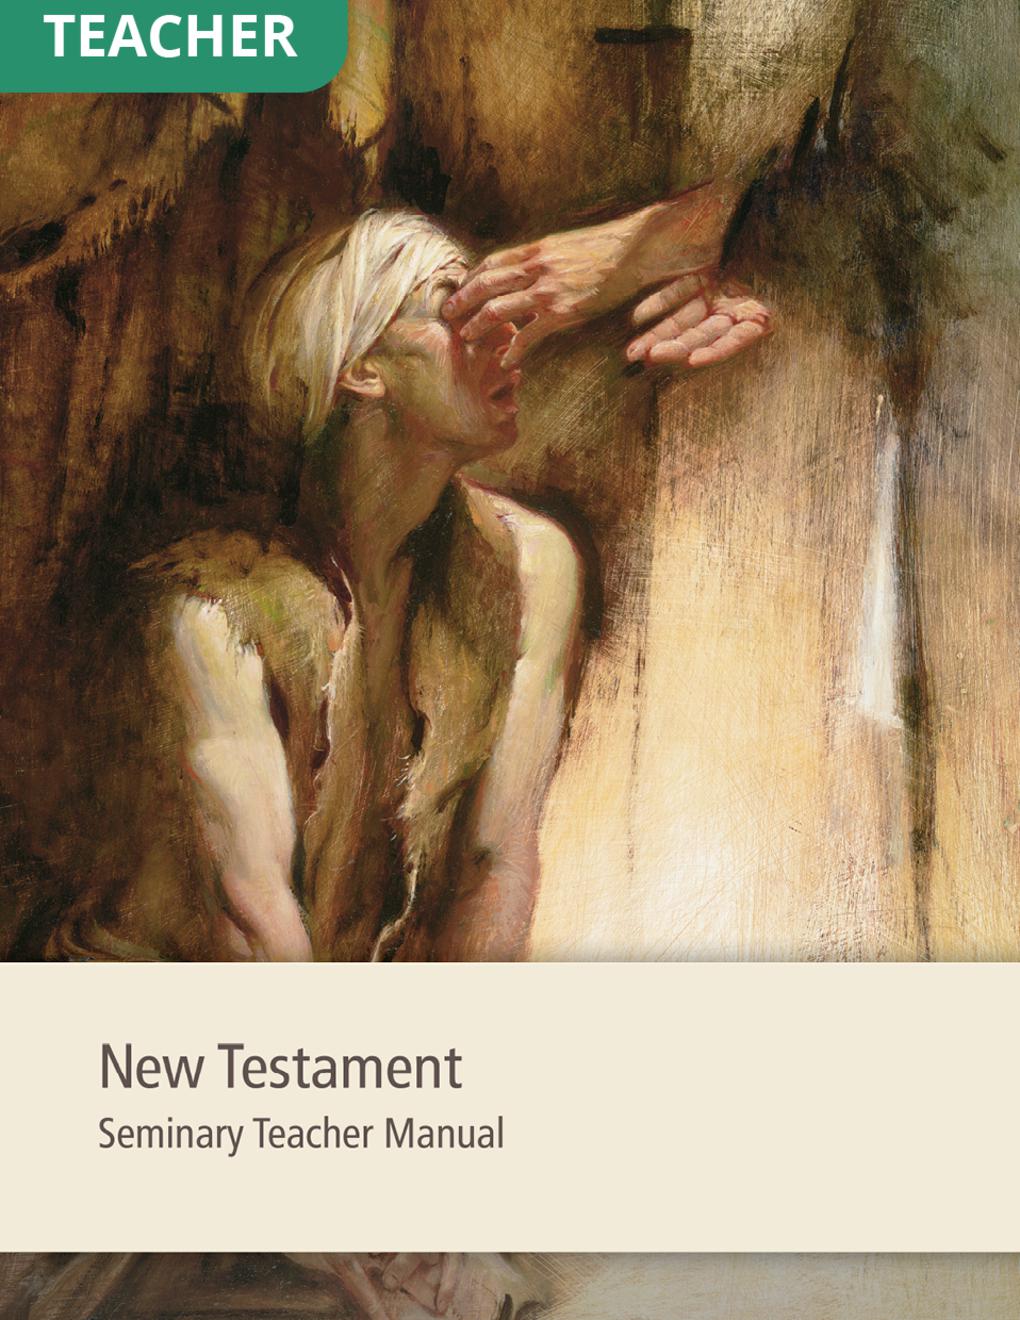 New Testament Seminary Teacher Manual